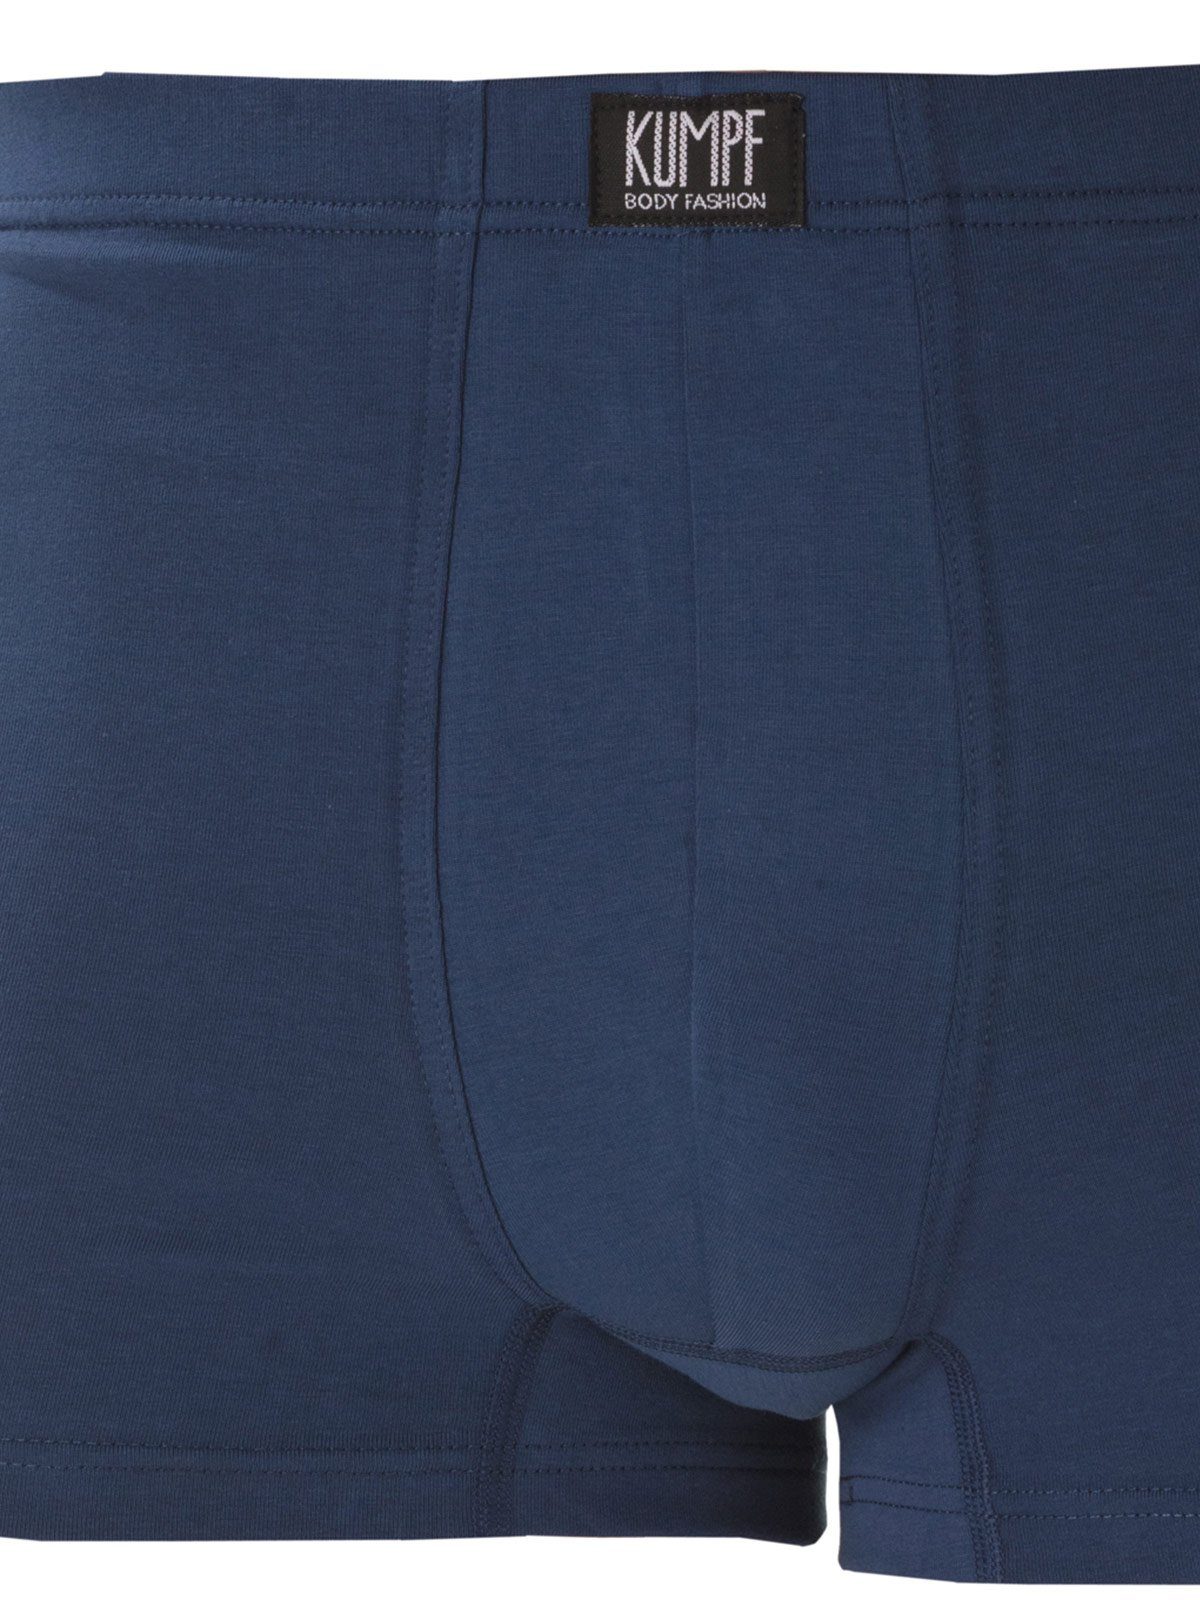 Pants darkblue Bio hohe Herren Markenqualität 1-St) Retro (Stück, Pants KUMPF Cotton